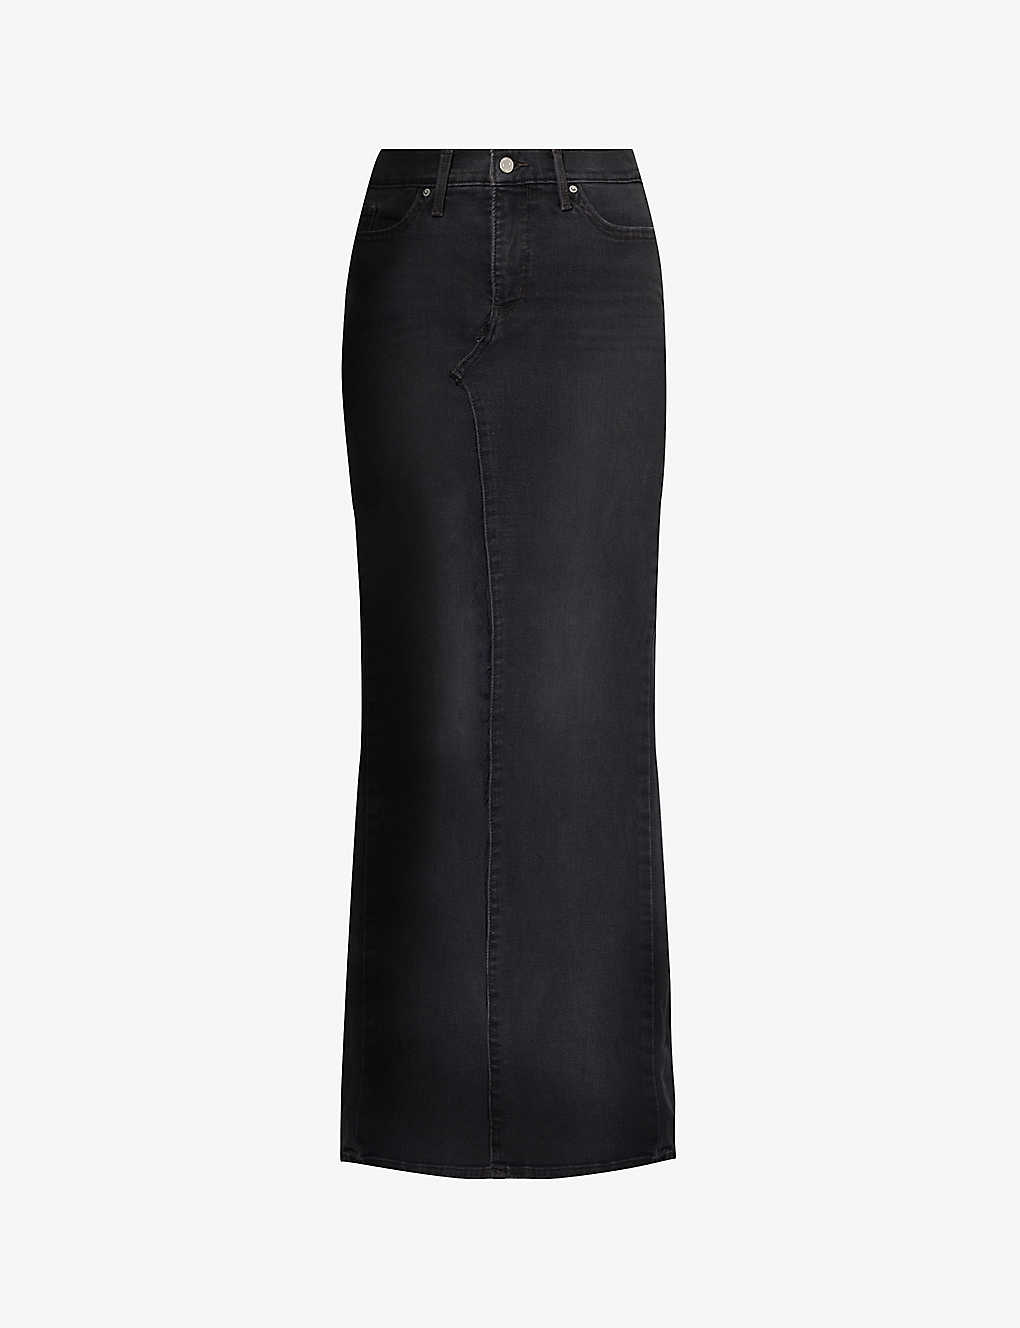 Jean Vintage Womens Black High-rise Distressed Denim Midi Skirt